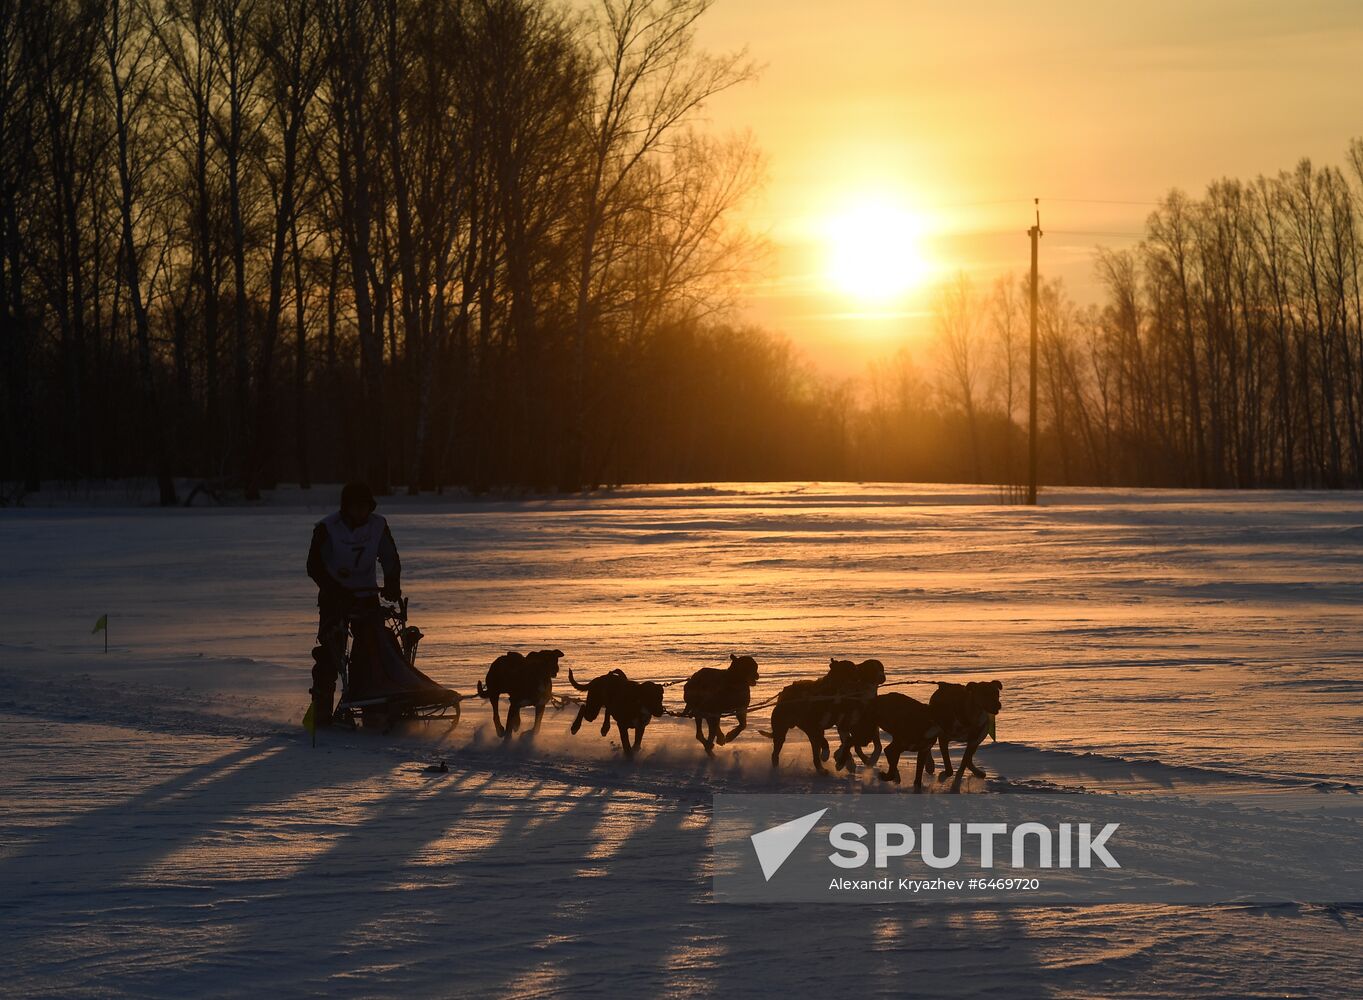 Russia Sled Dog Race